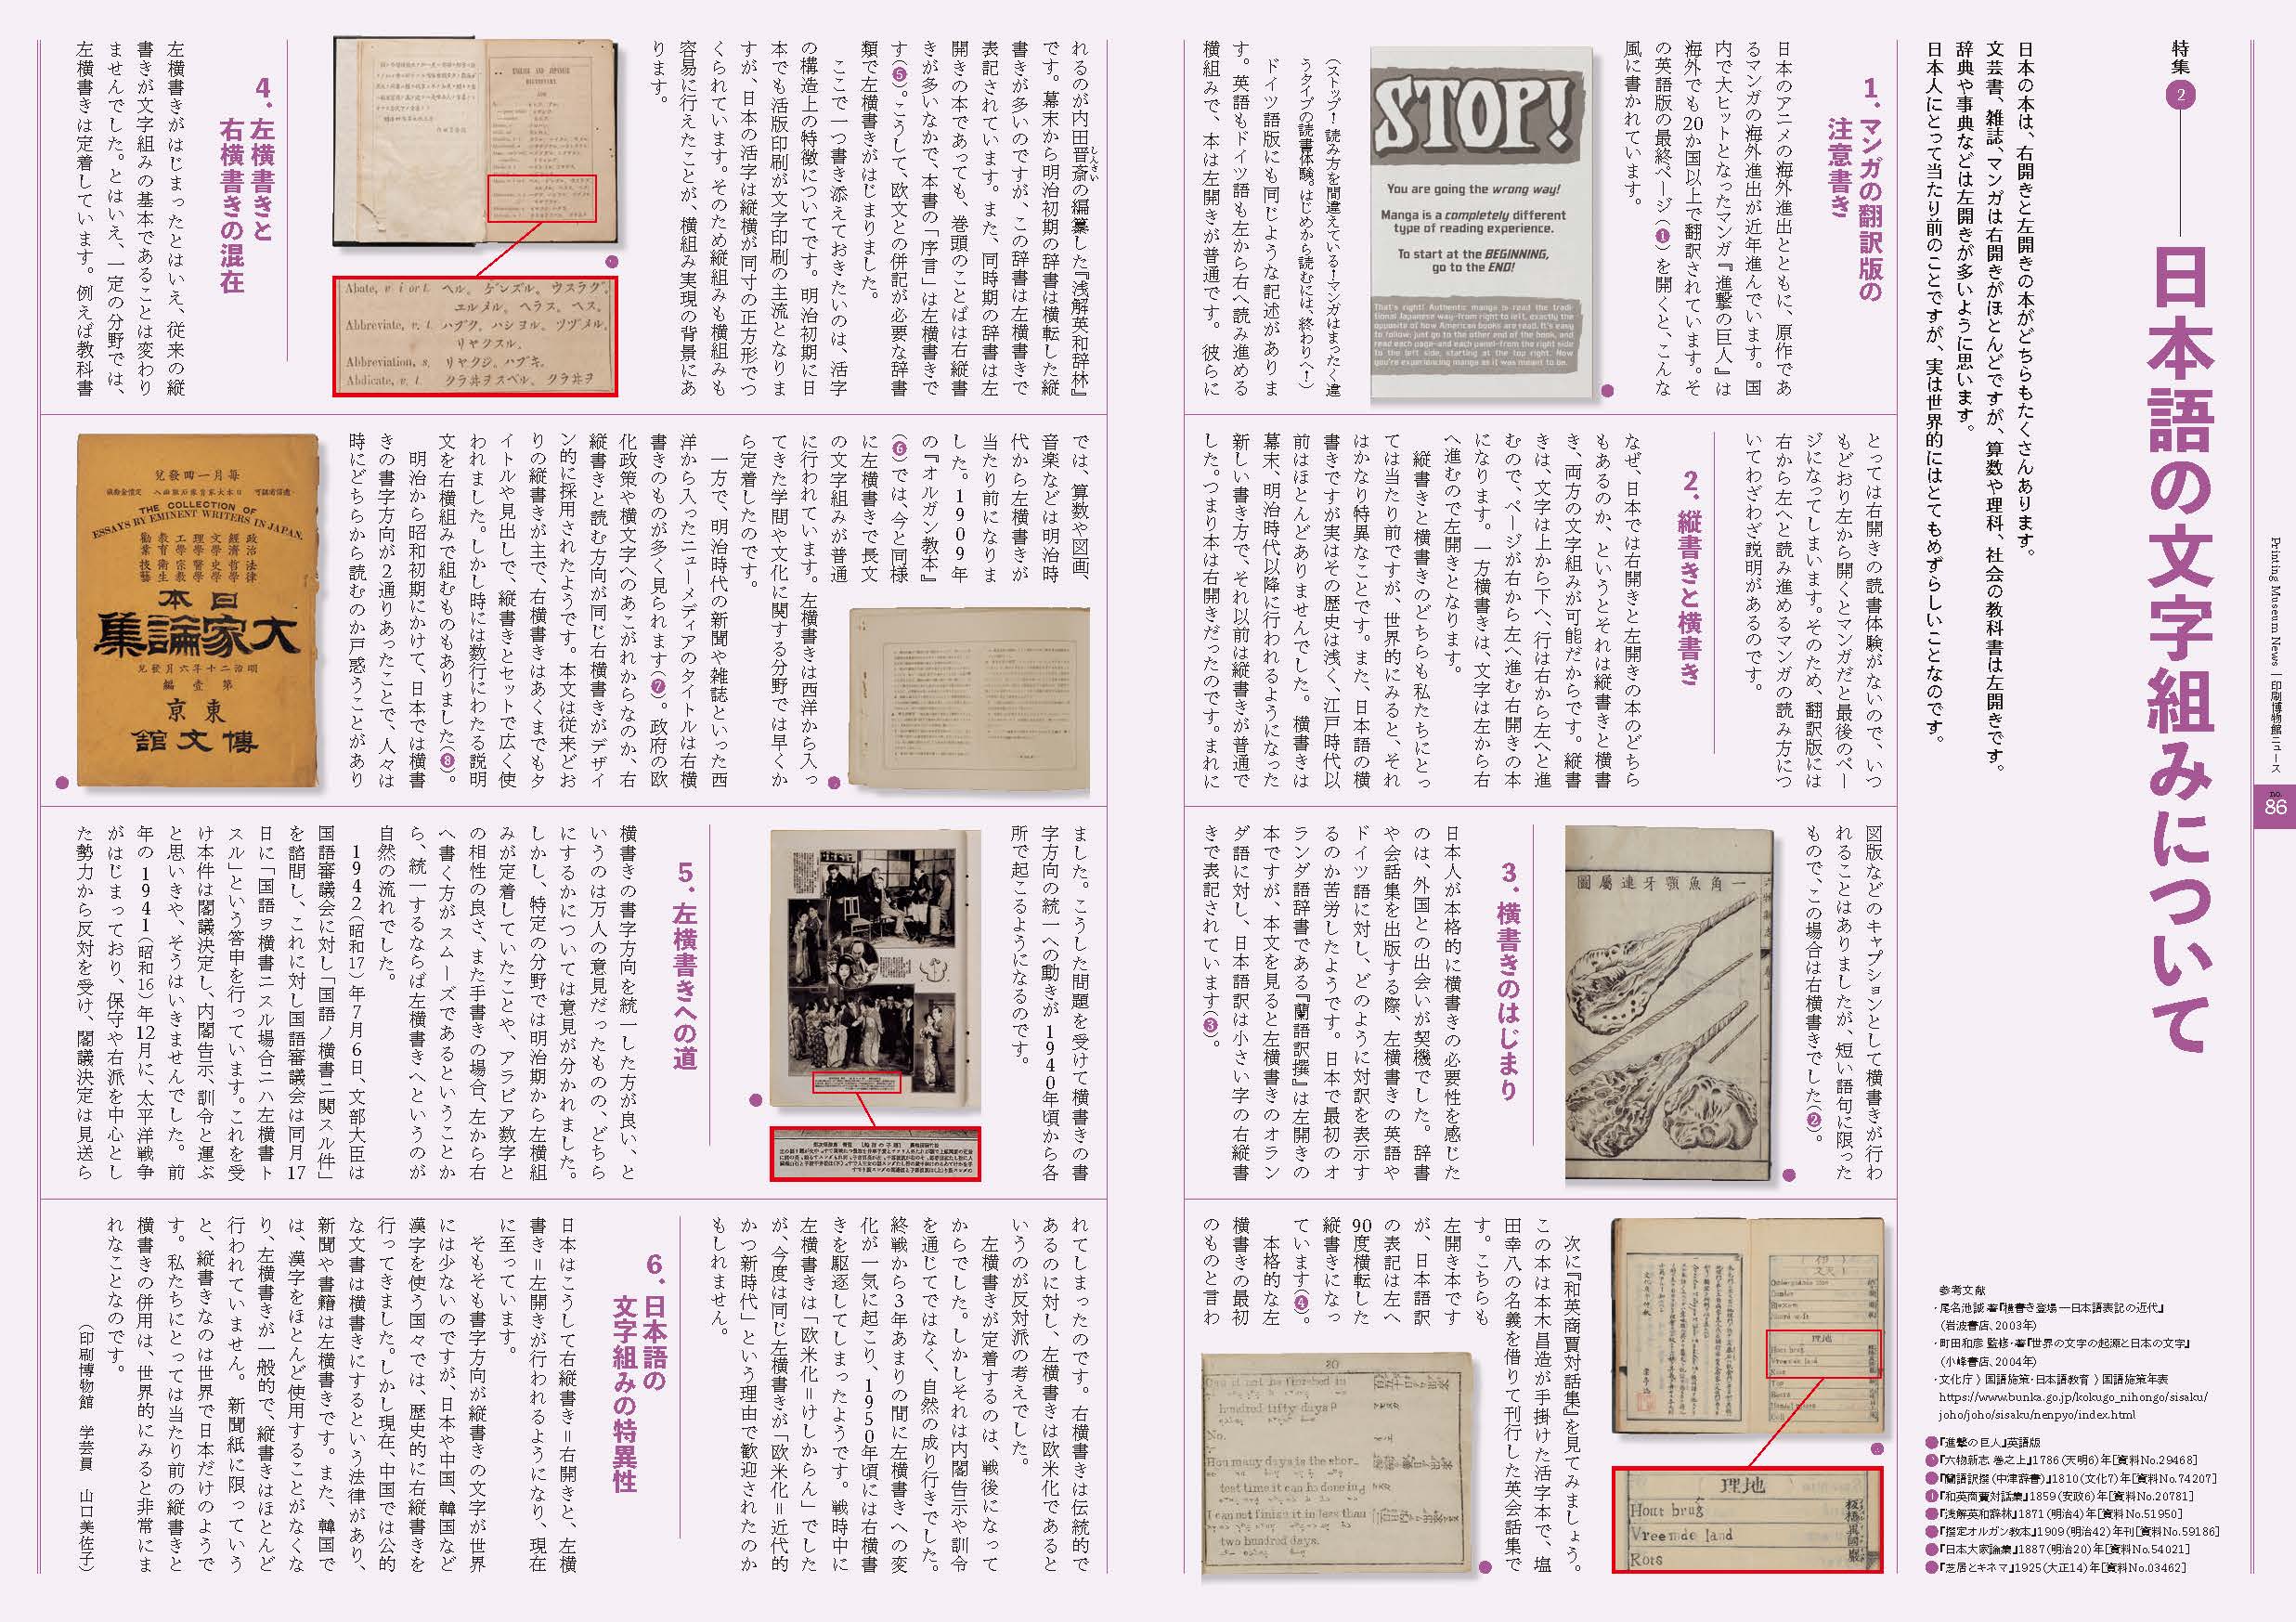 vol.86 - 特集2 - | 印刷博物館ニュース | 印刷博物館 Printing Museum